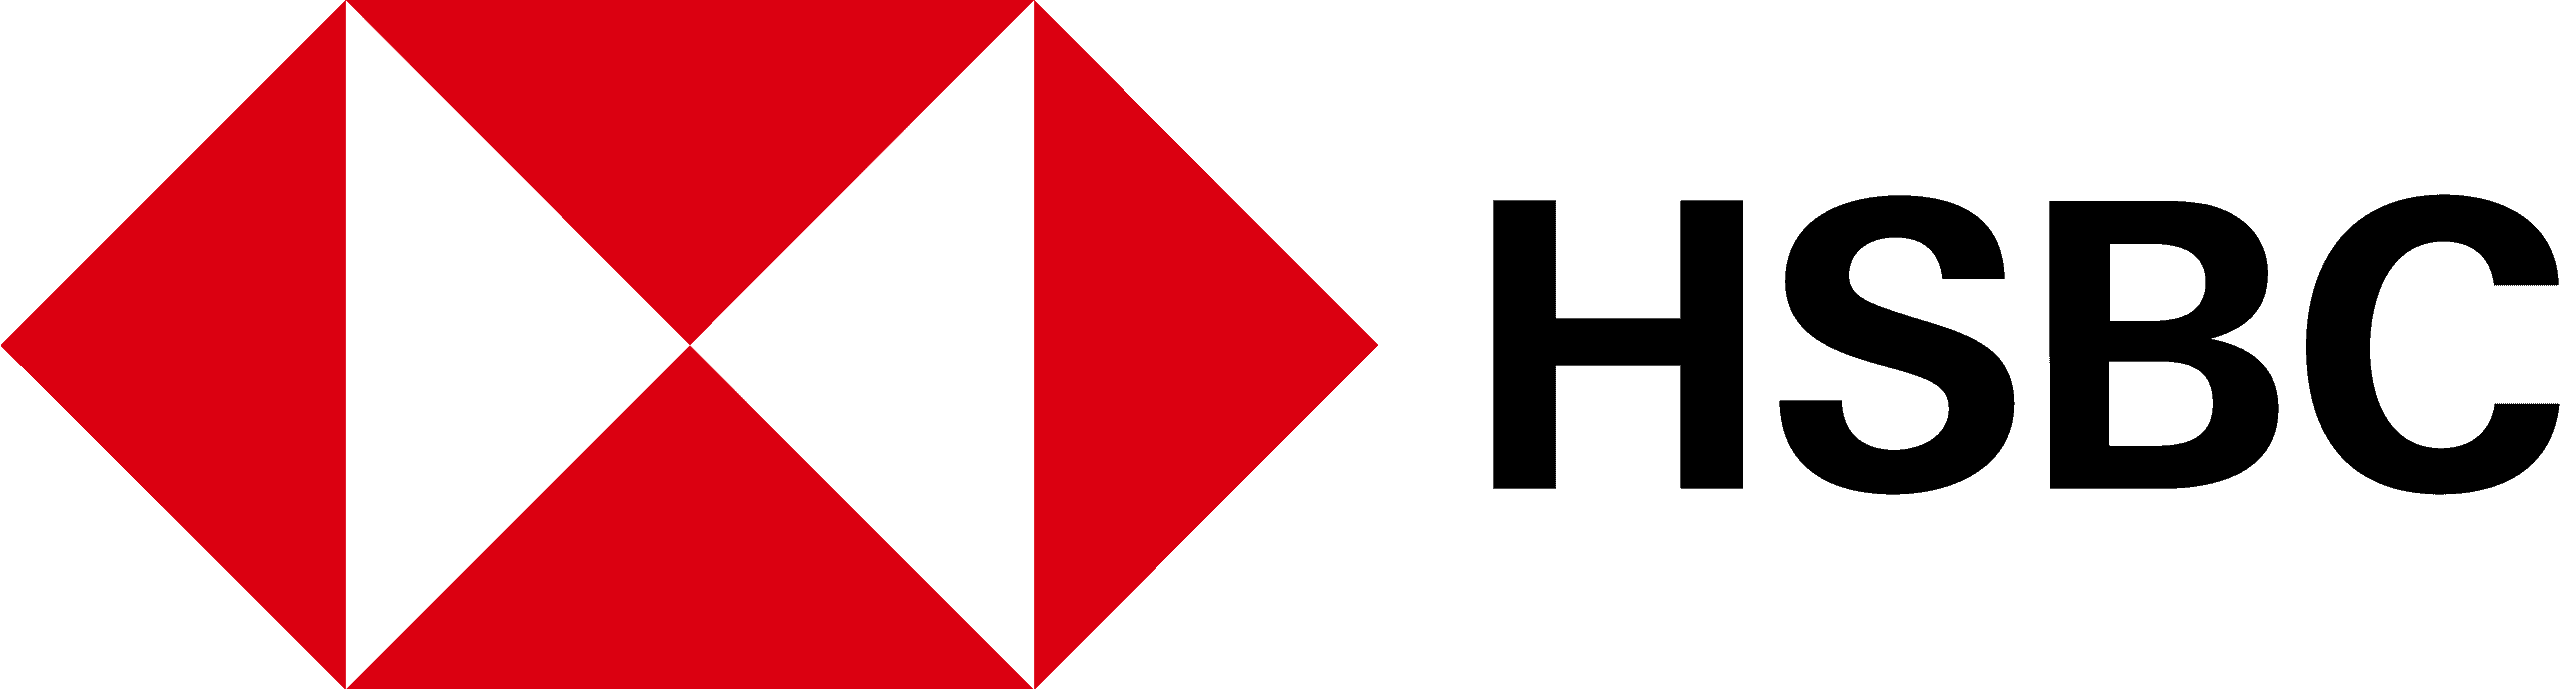 hsbccanada logo-img